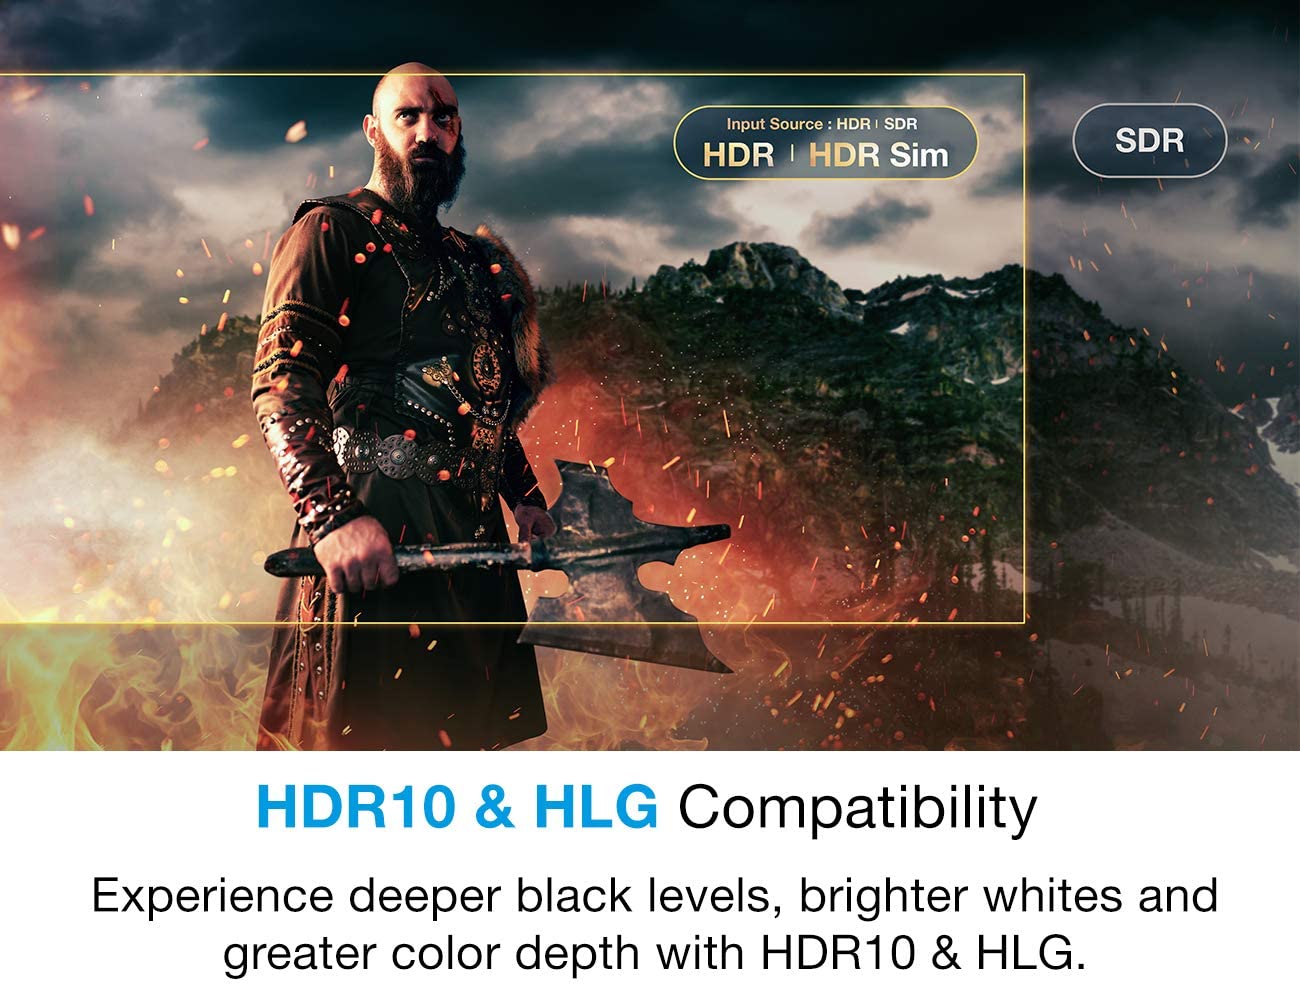 HDR10 & HLG Compatibility